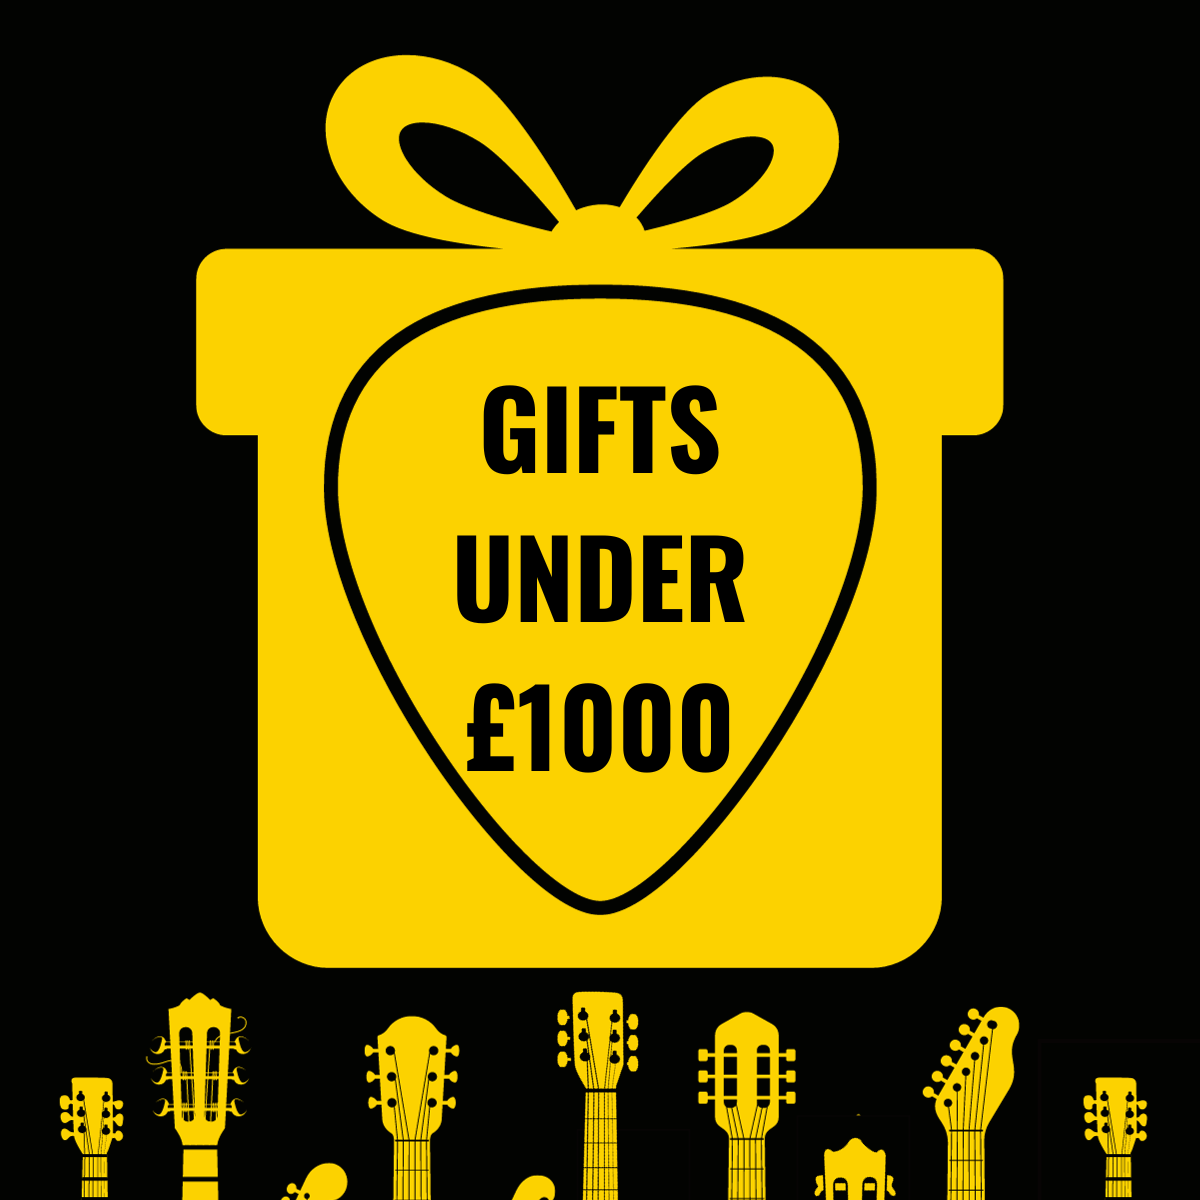 Gifts Under £1000